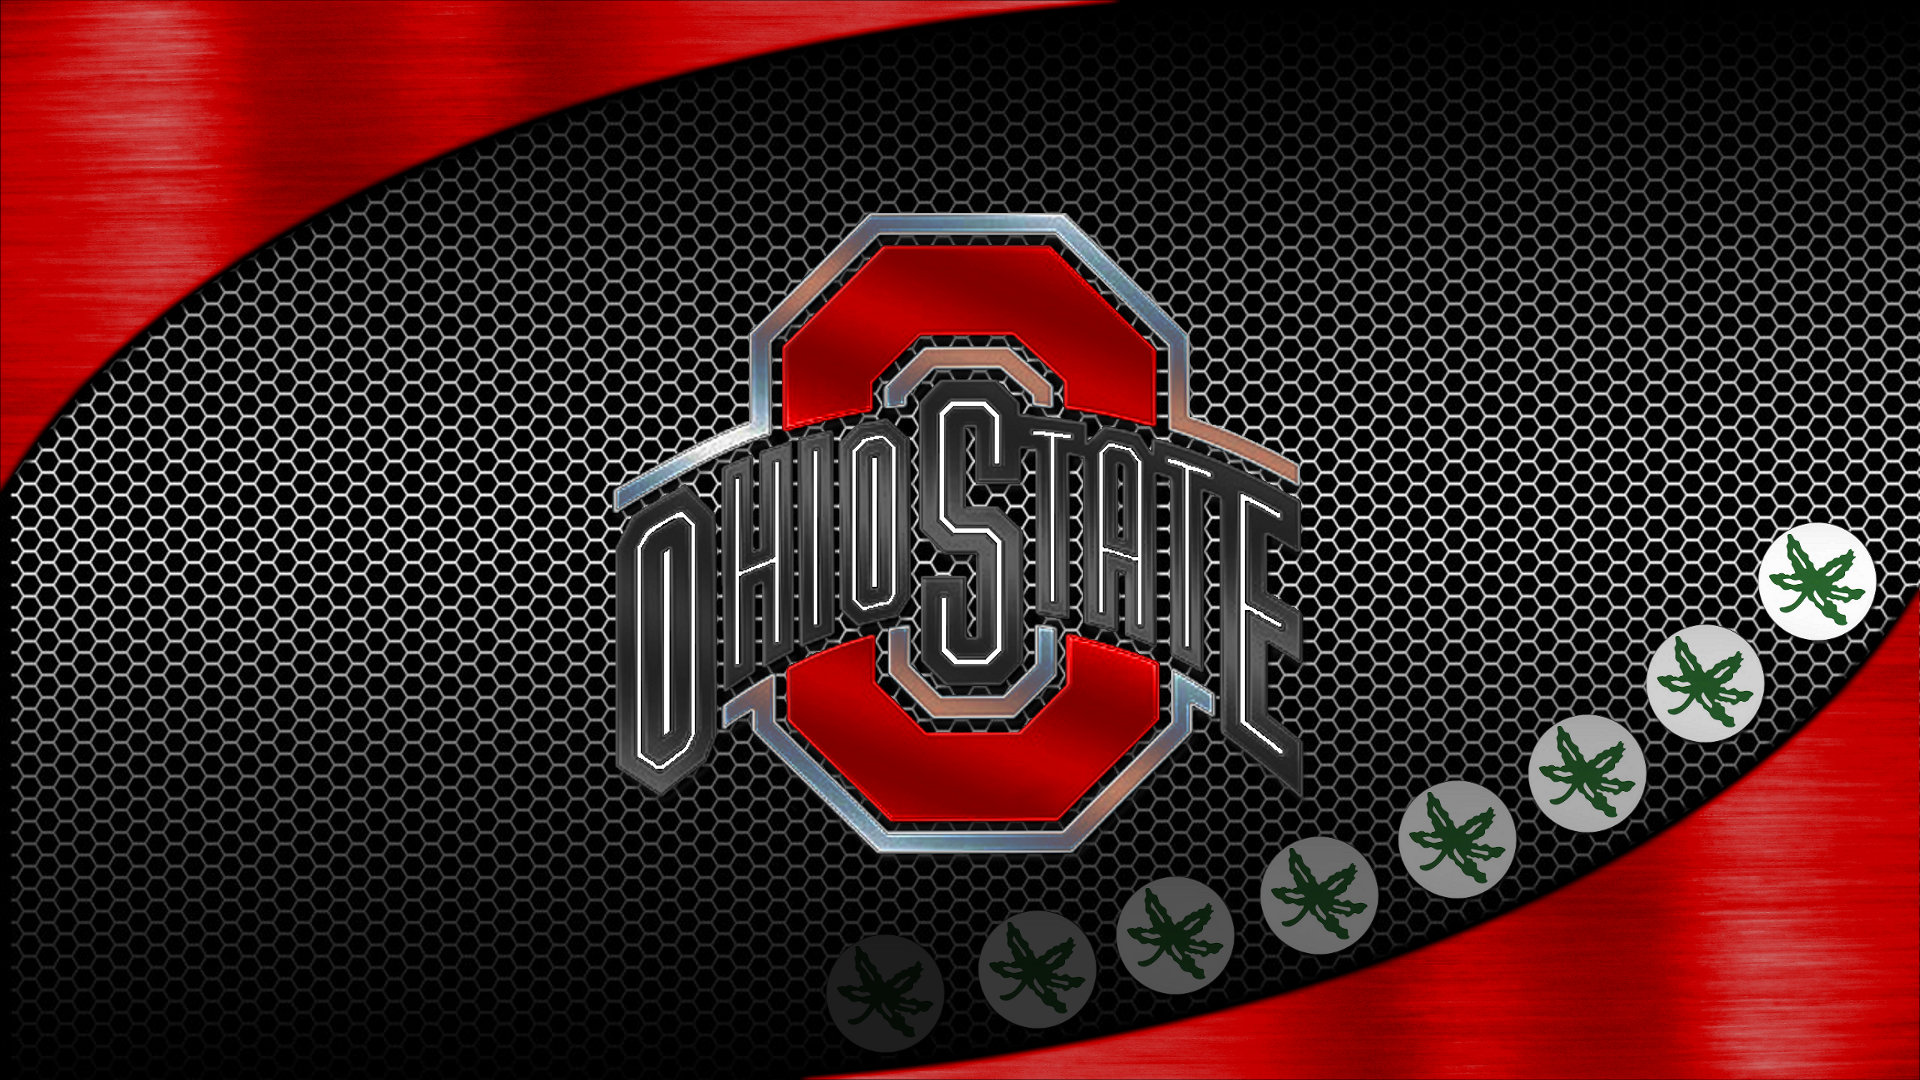 Osu Wallpaper Ohio State Buckeyes